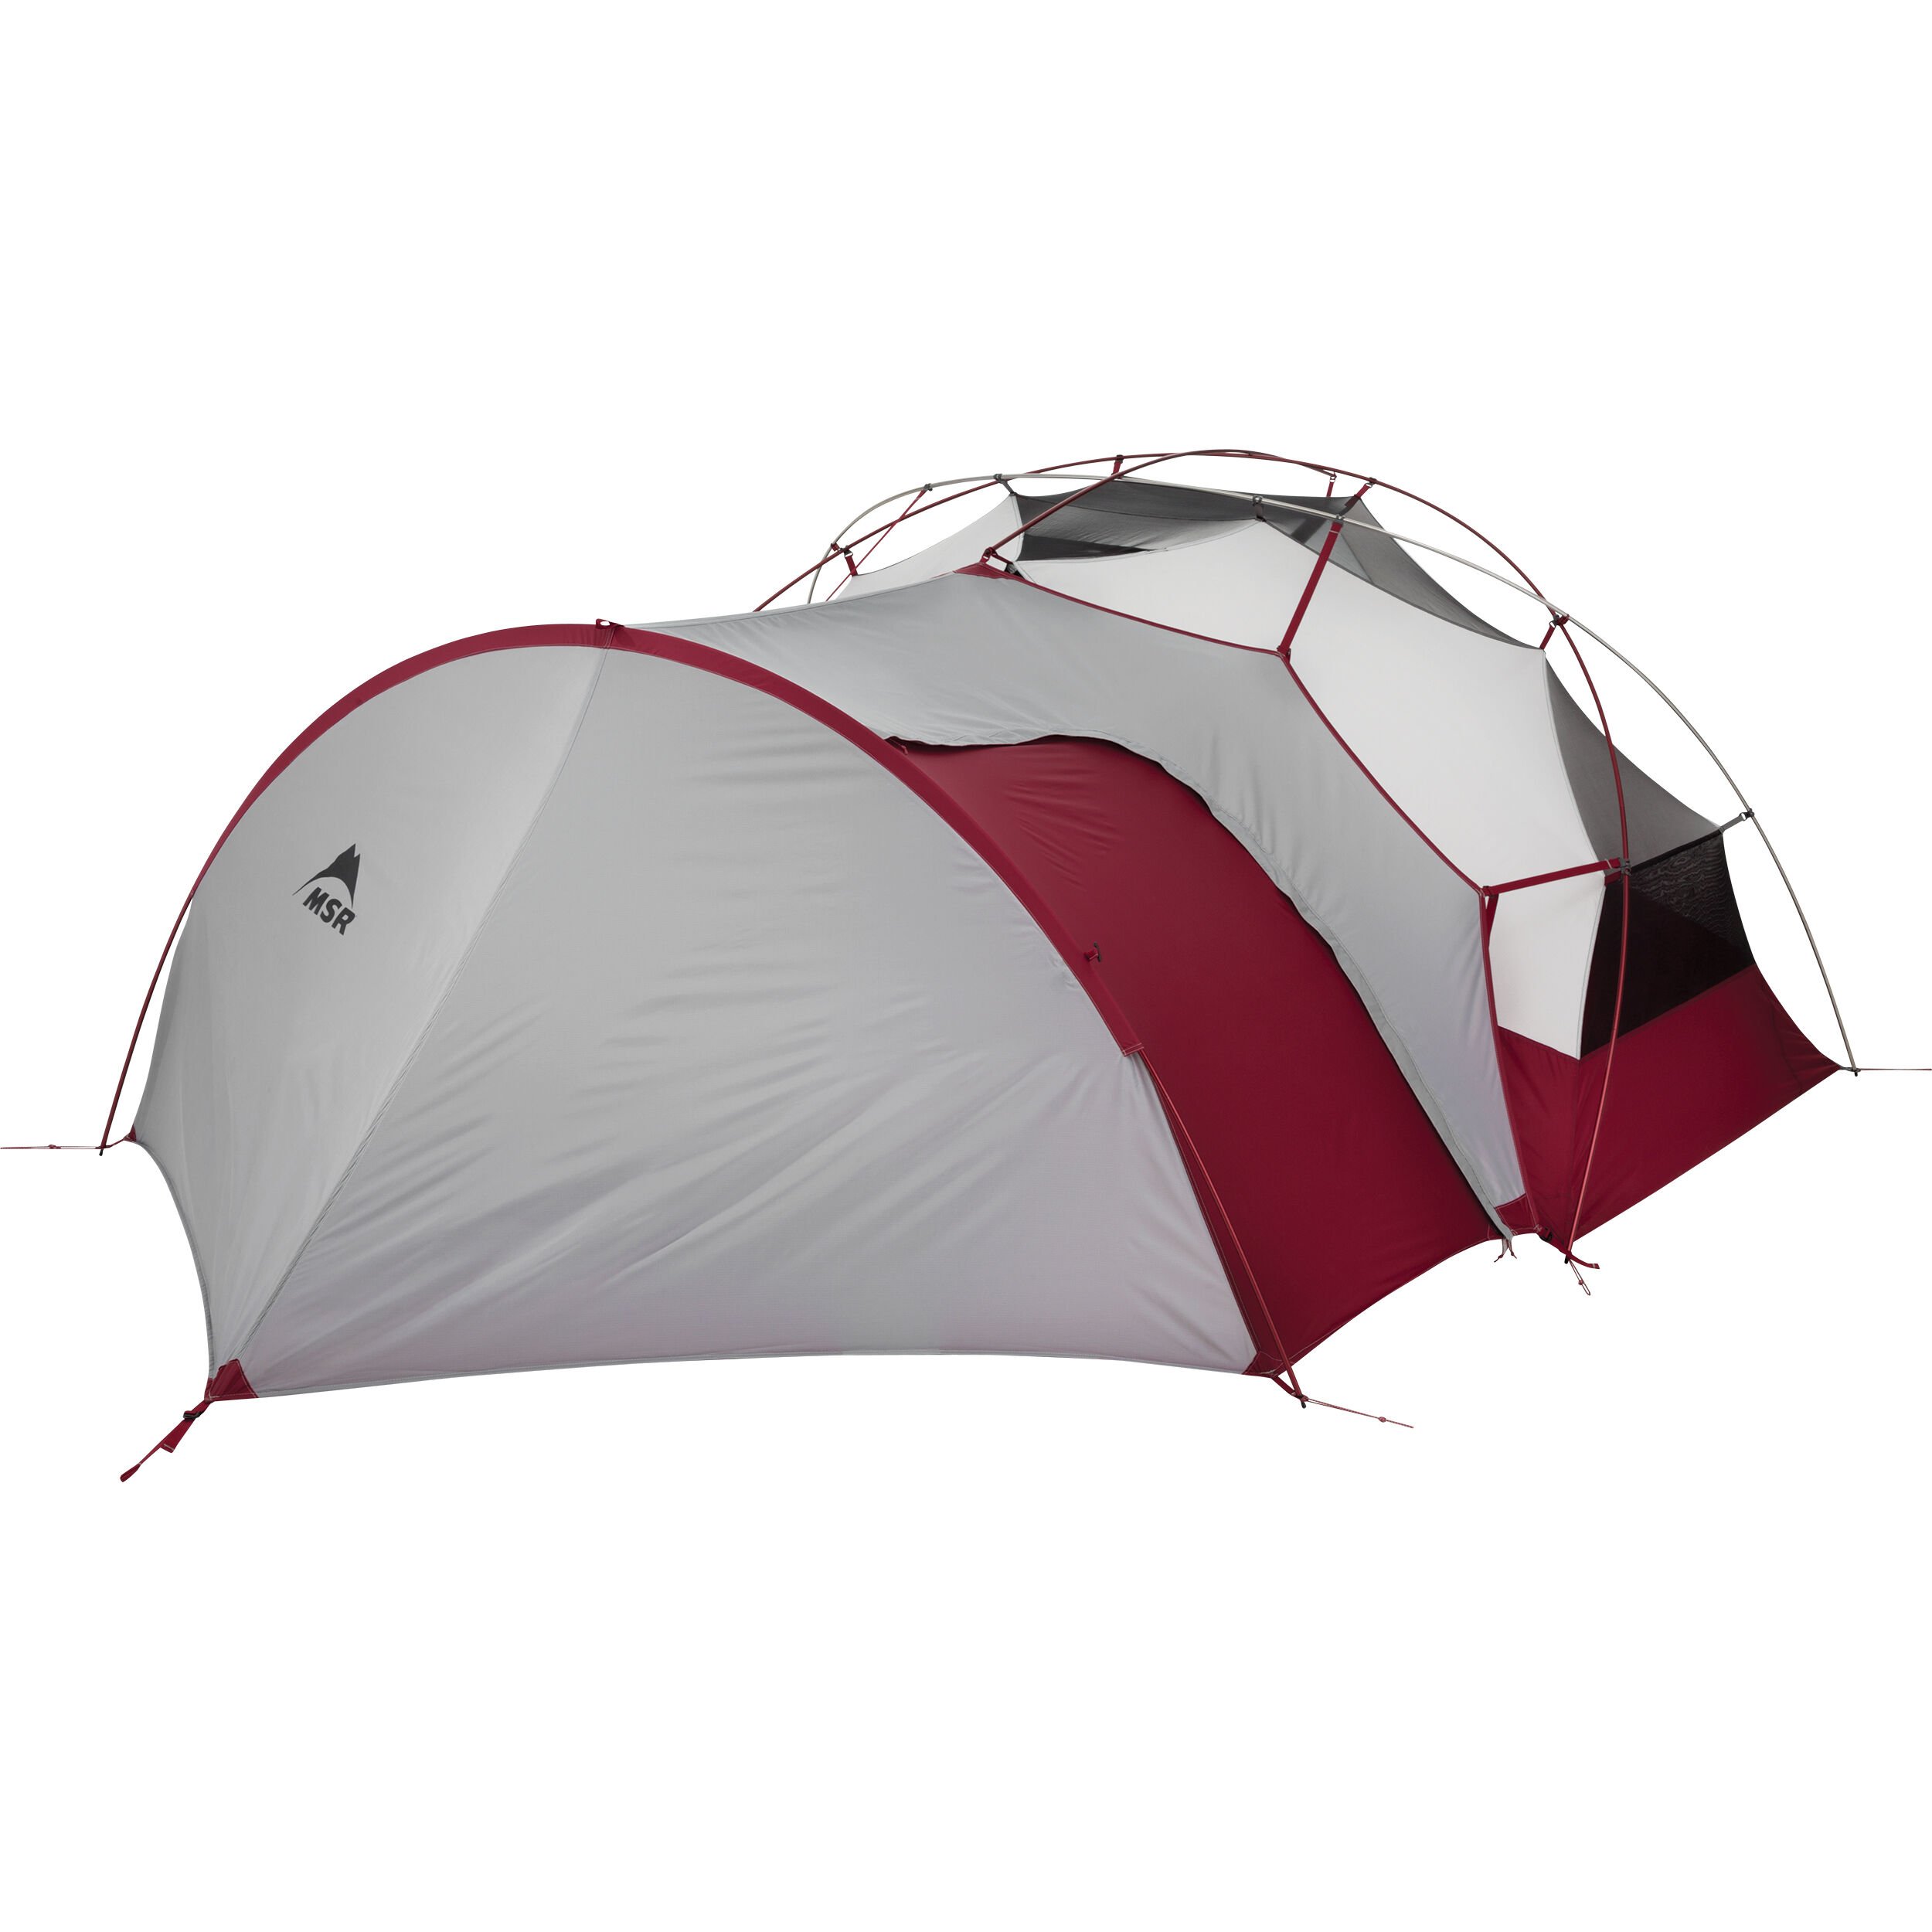 MSR Tent Pole Repair Splint Small Tent Accessory